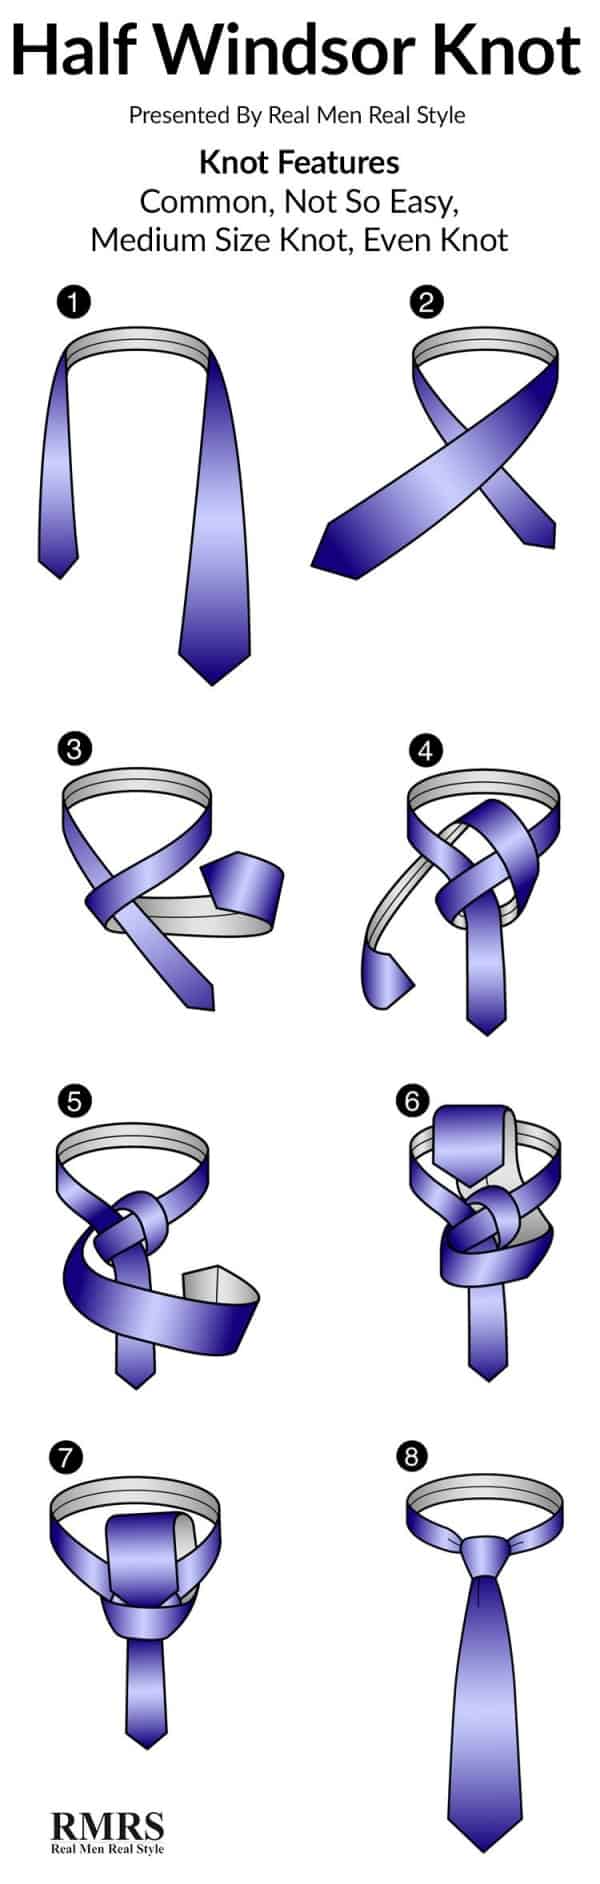 Stylish Different Ways To Tie a Tie